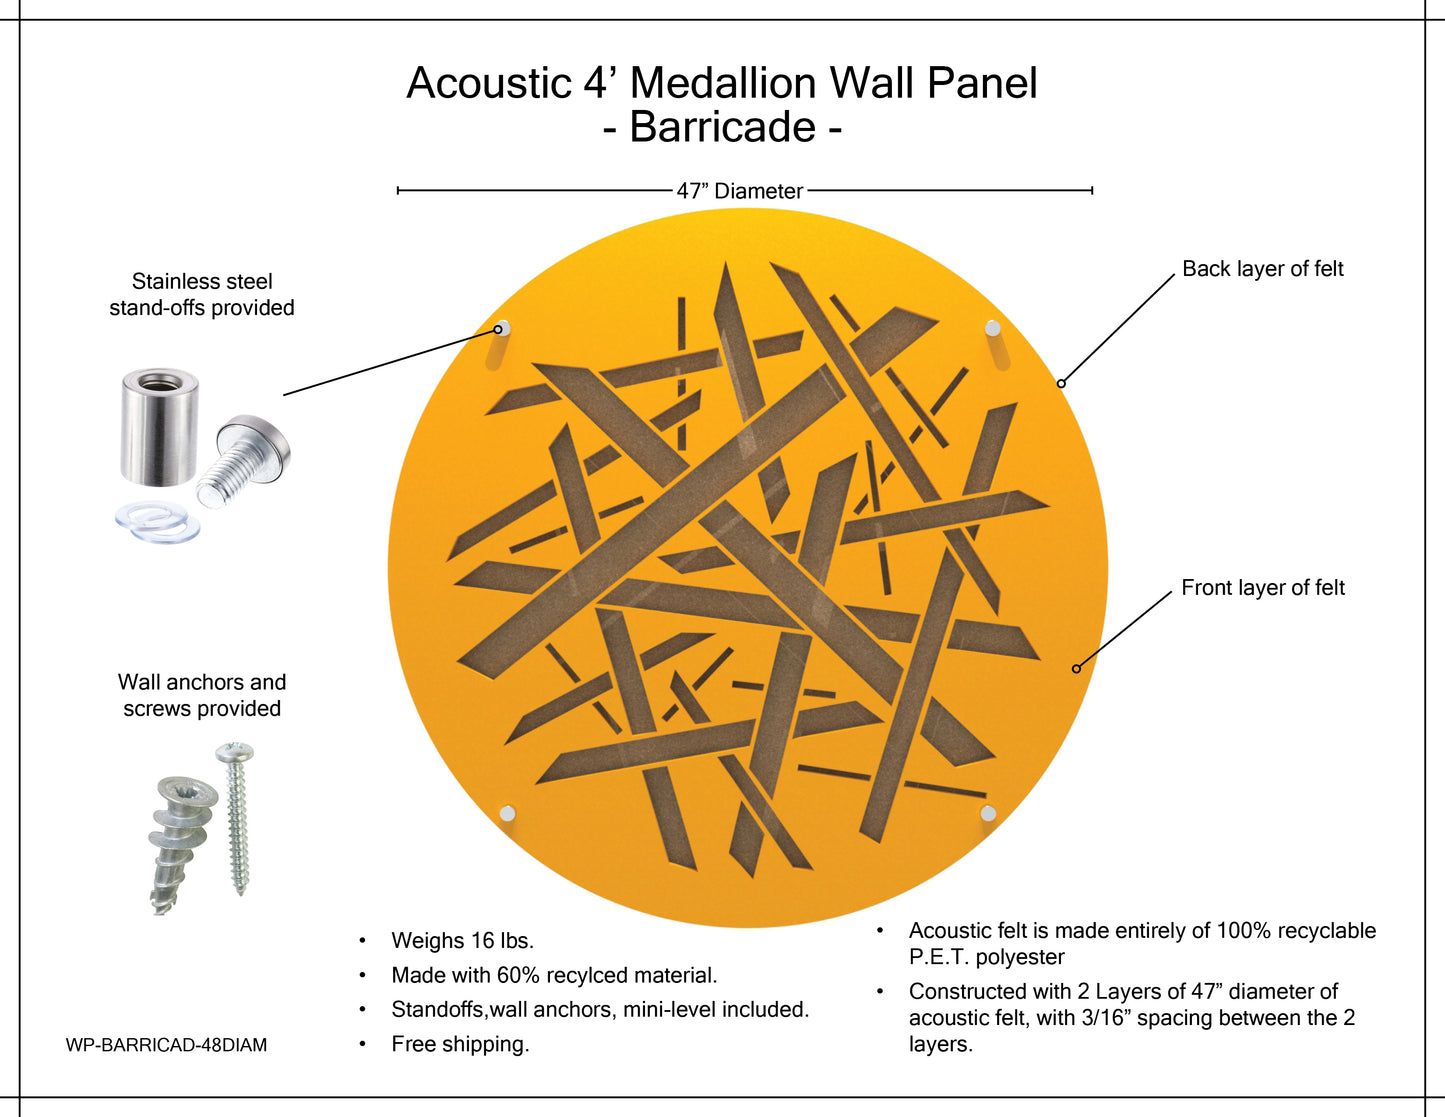 Medallion Acoustic Wall Panel - Barricade